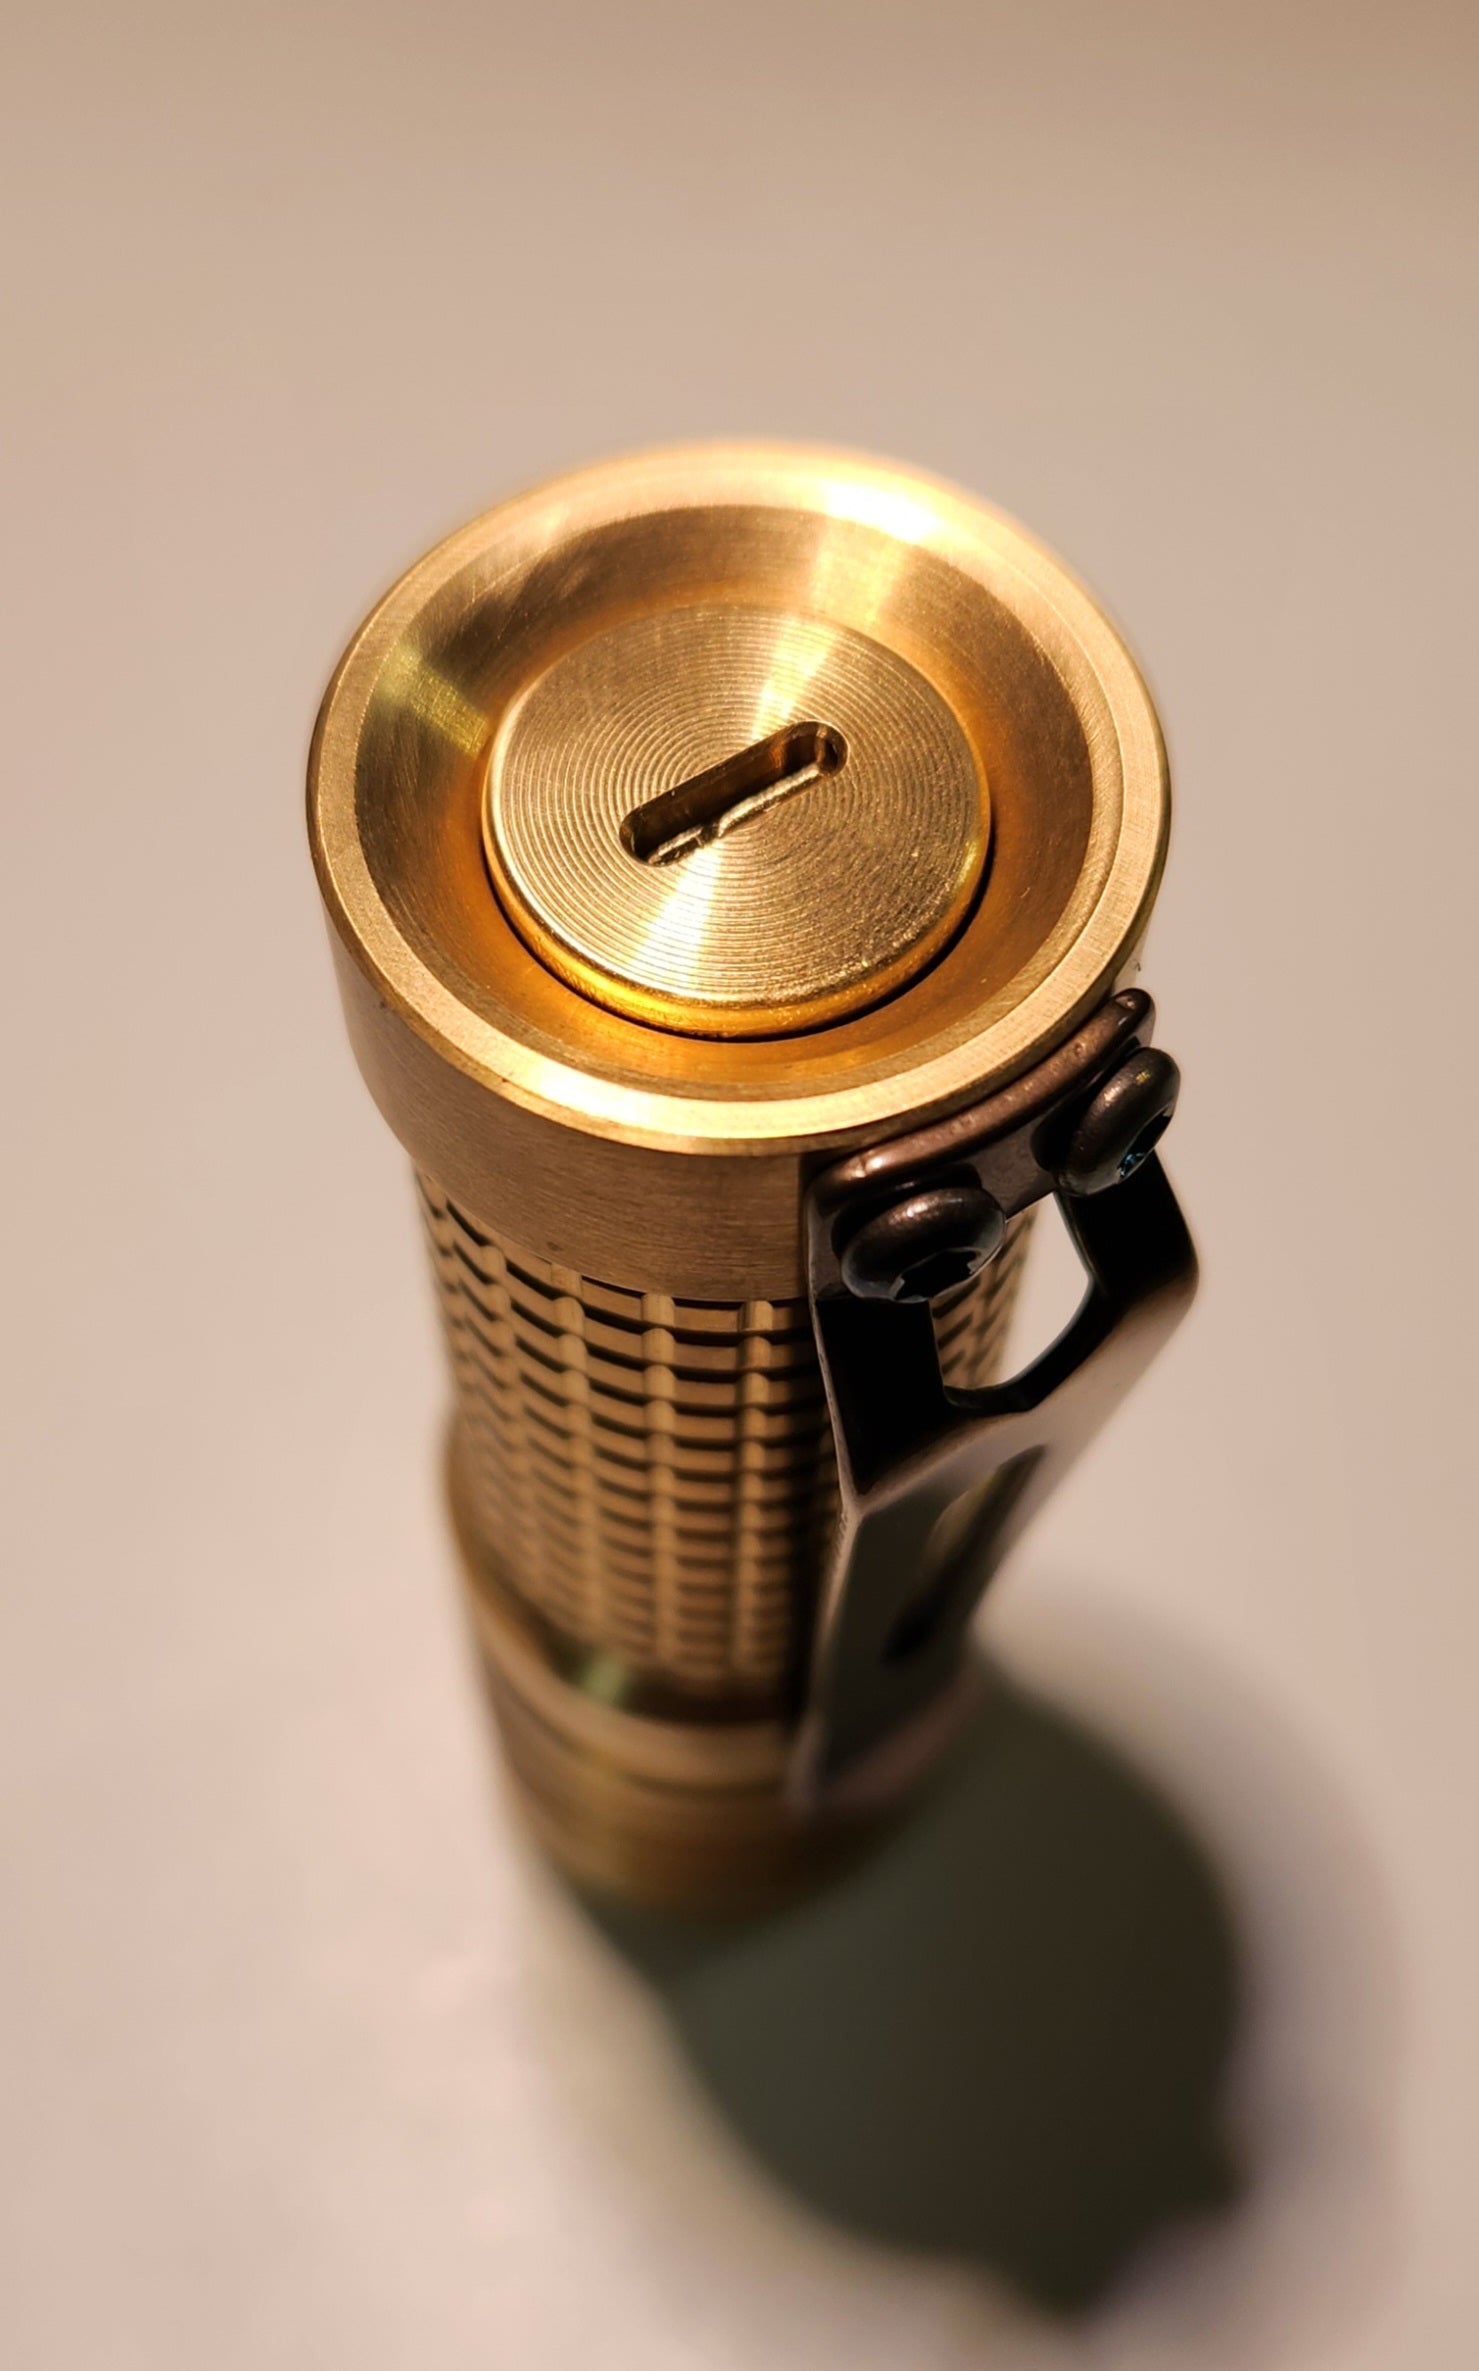 Maeerxu XT3 Brass 18350 3000LM EDC Flashlight